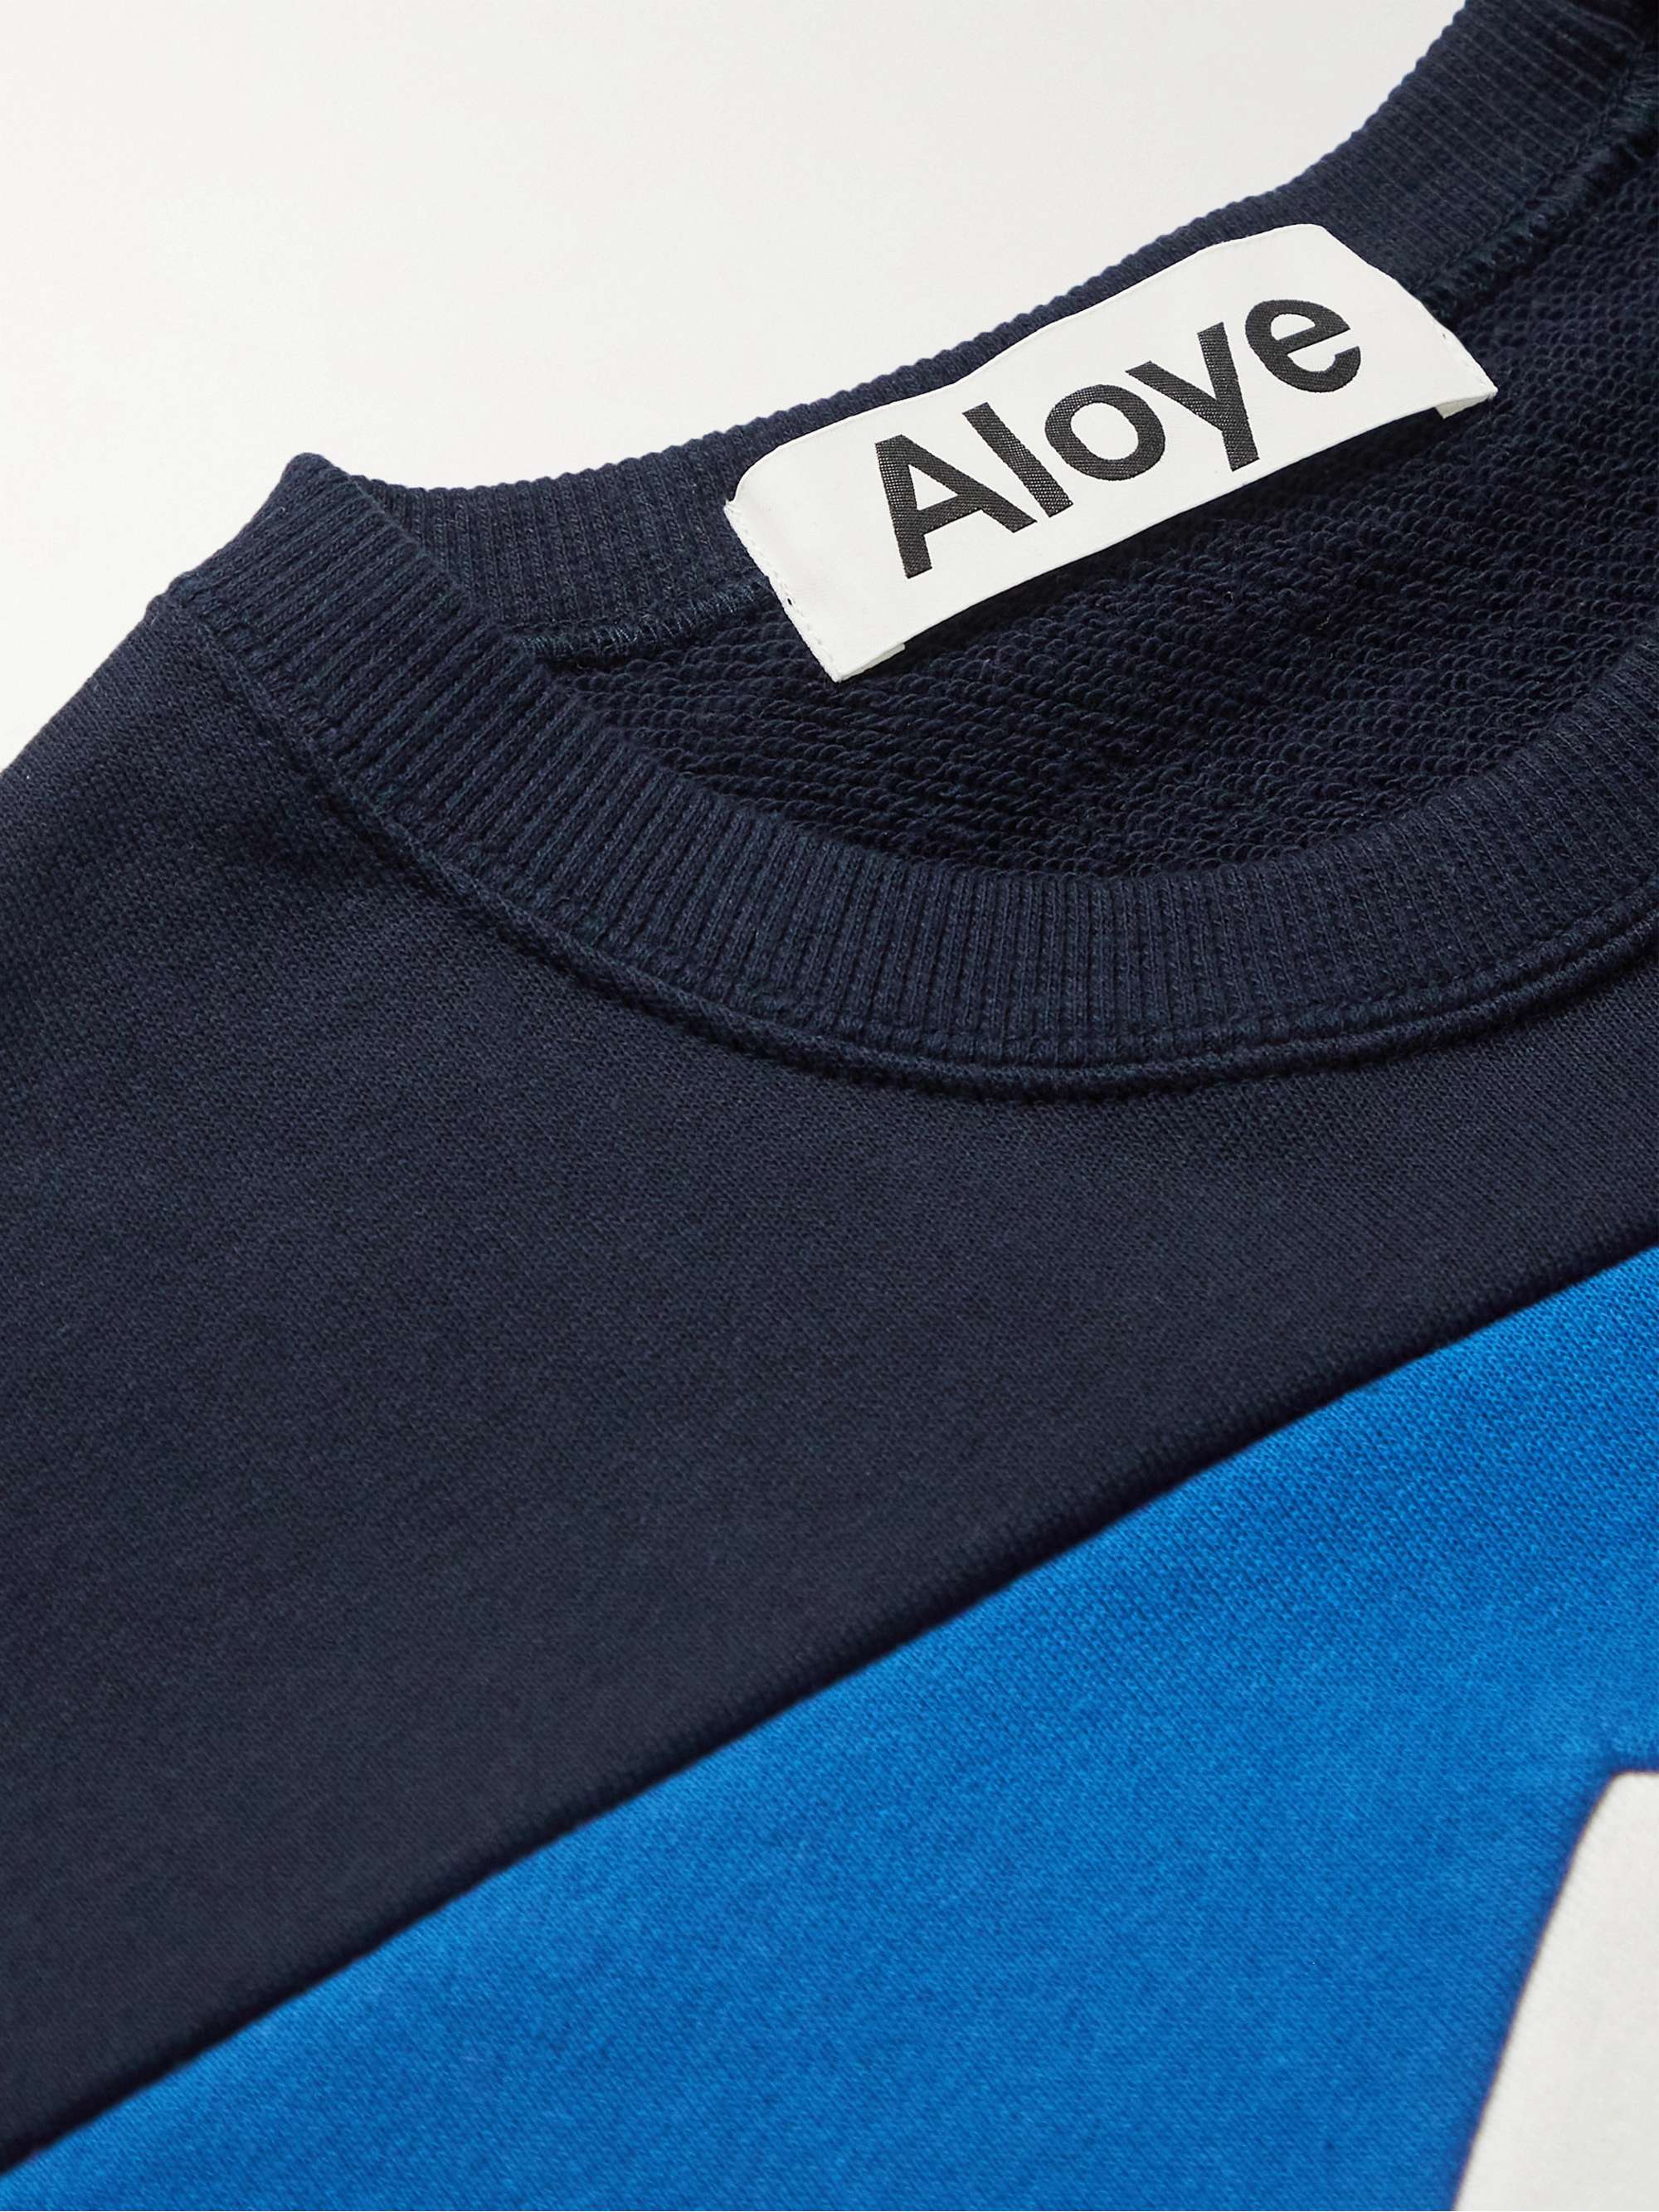 ALOYE Colour-Block Cotton-Jersey Sweatshirt